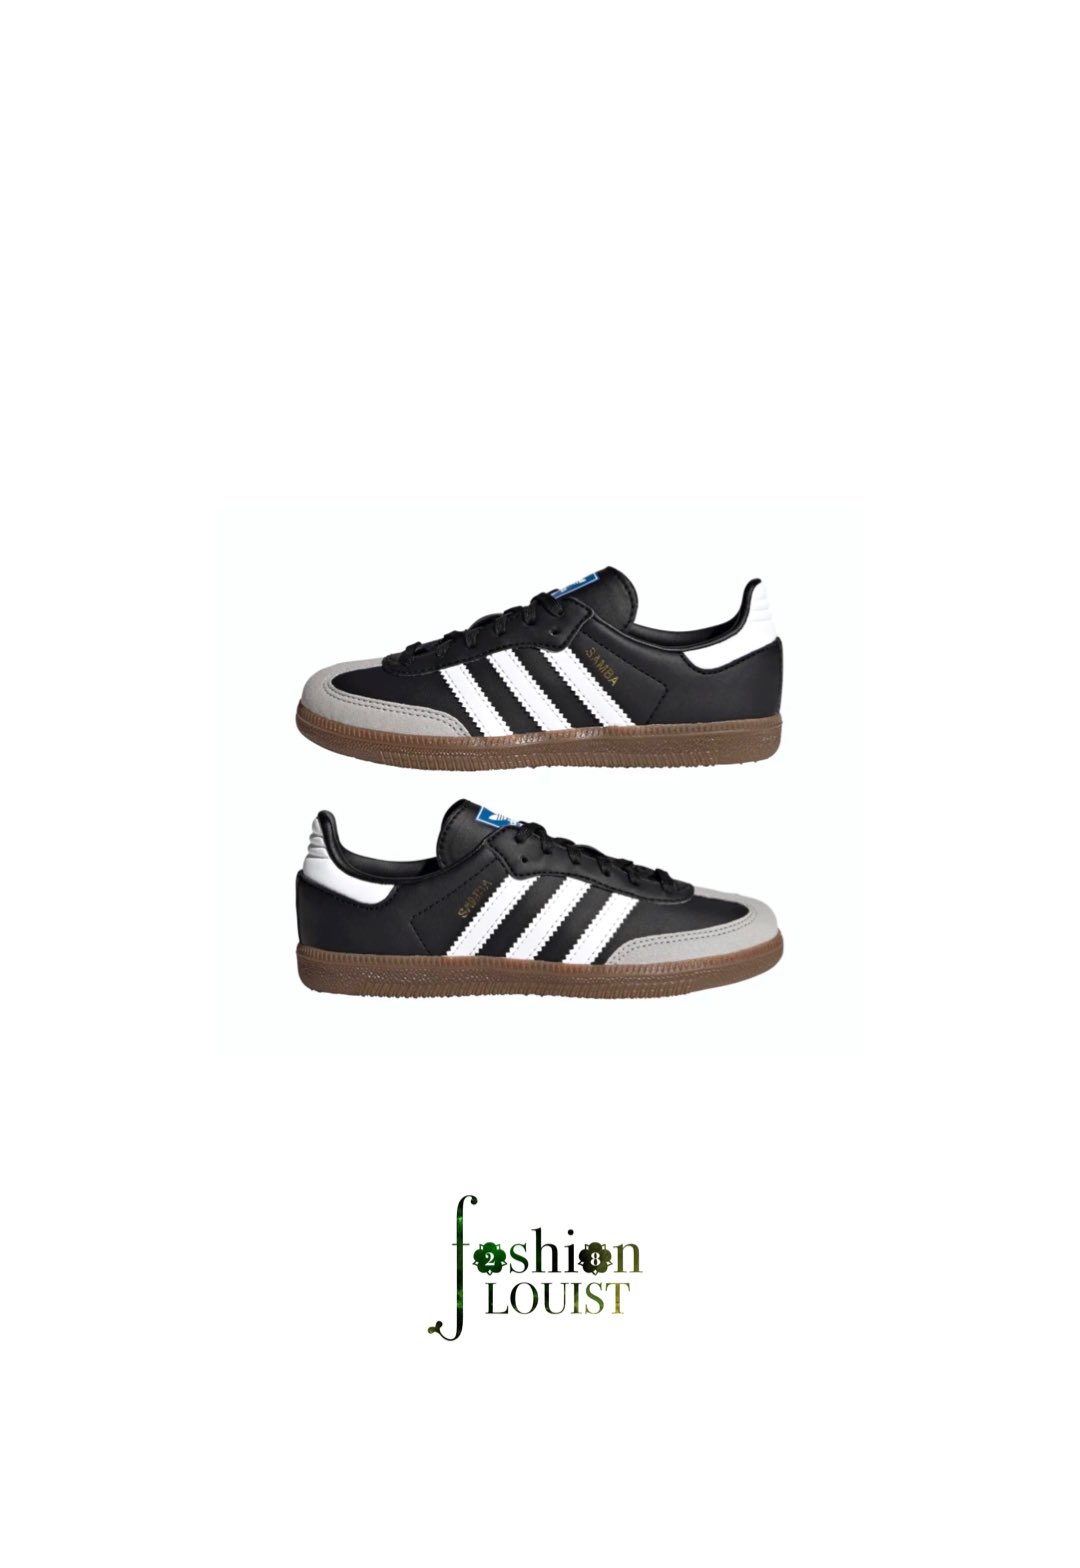 Louis Tomlinson Fashion on X: Louis wore Adidas Samba Vegan Shoes